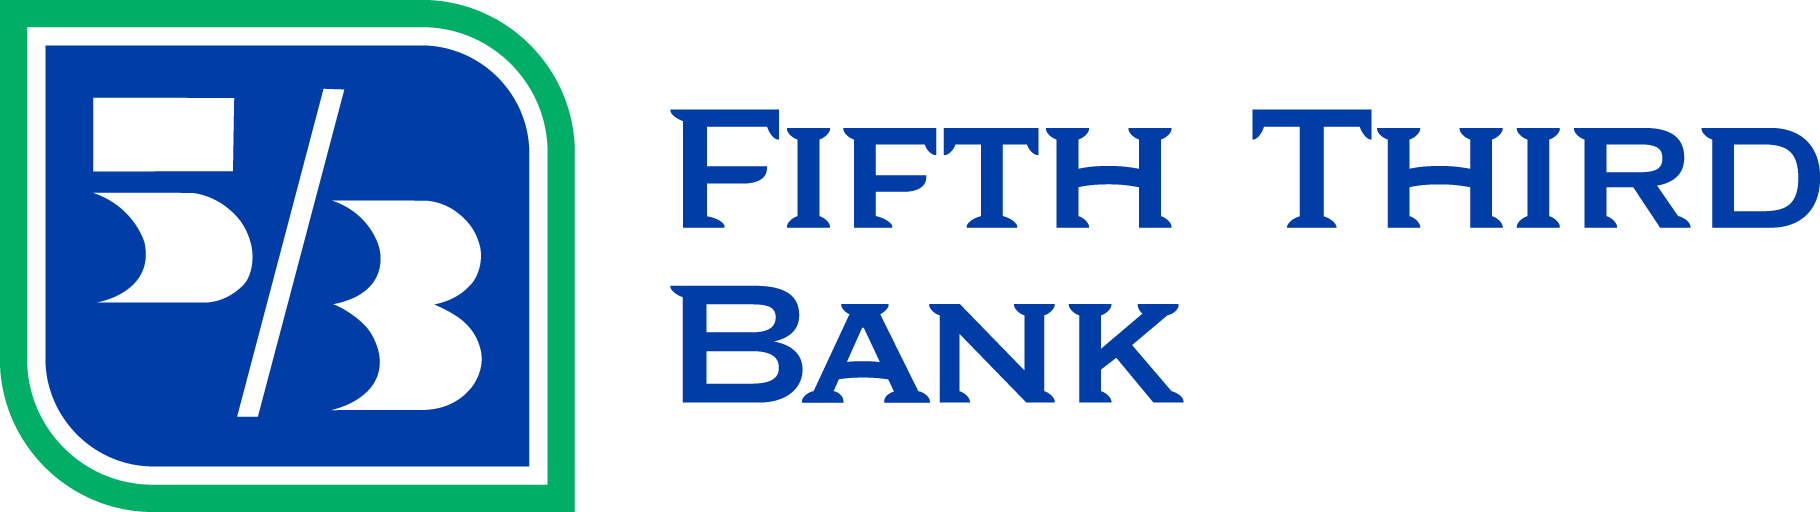 Blue bank. Синий банк. Банк с синим логотипом. Синий логотип банка. Синяя эмблема банк.